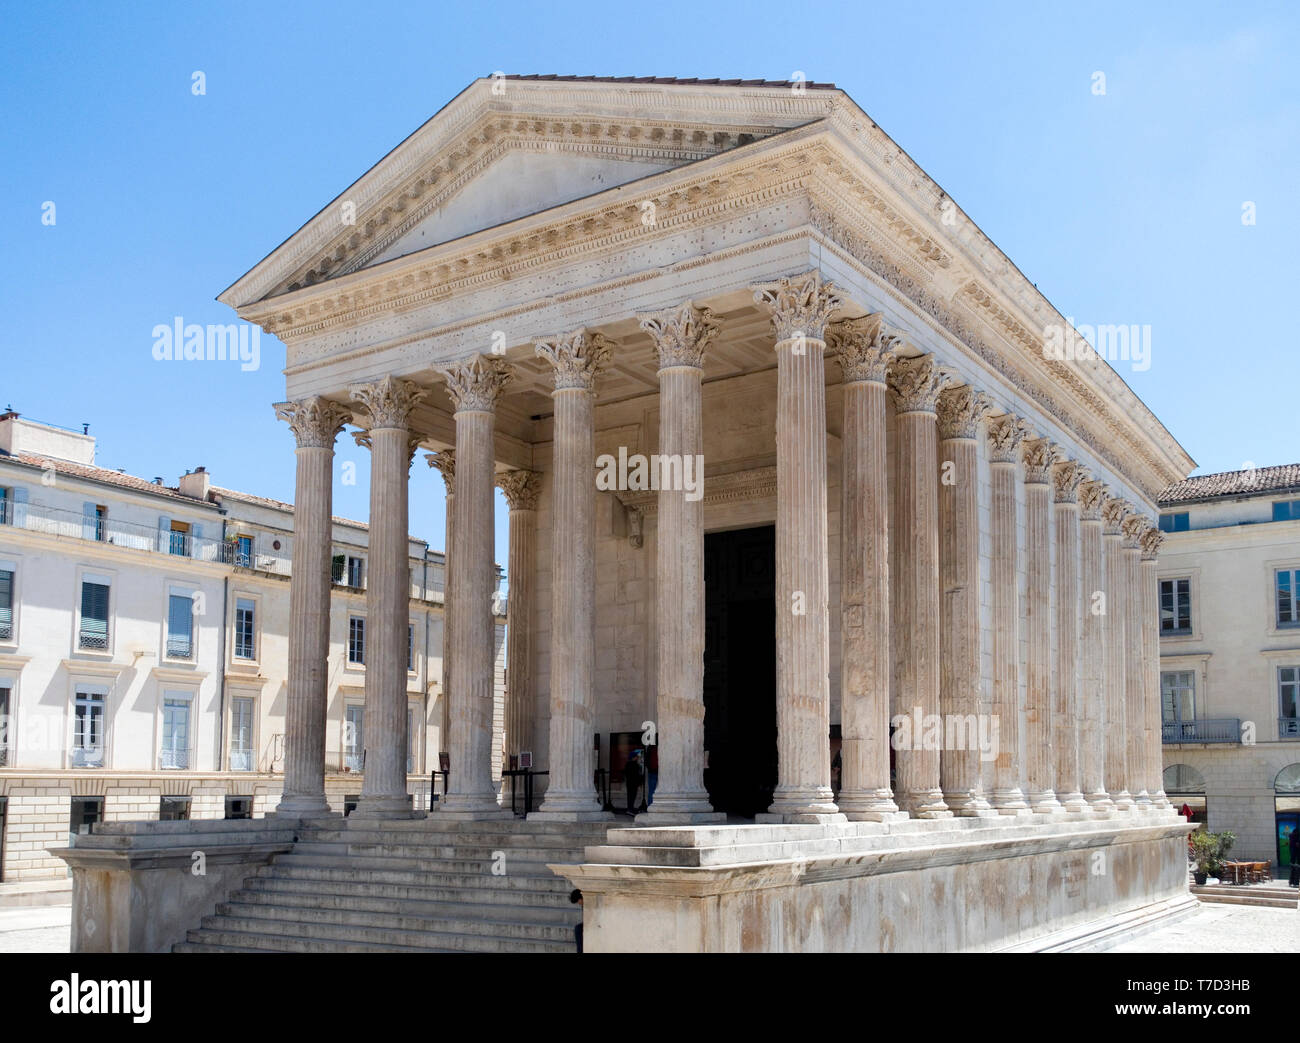 La Maison Carree, Roman Temple, Nimes, France without people Stock Photo